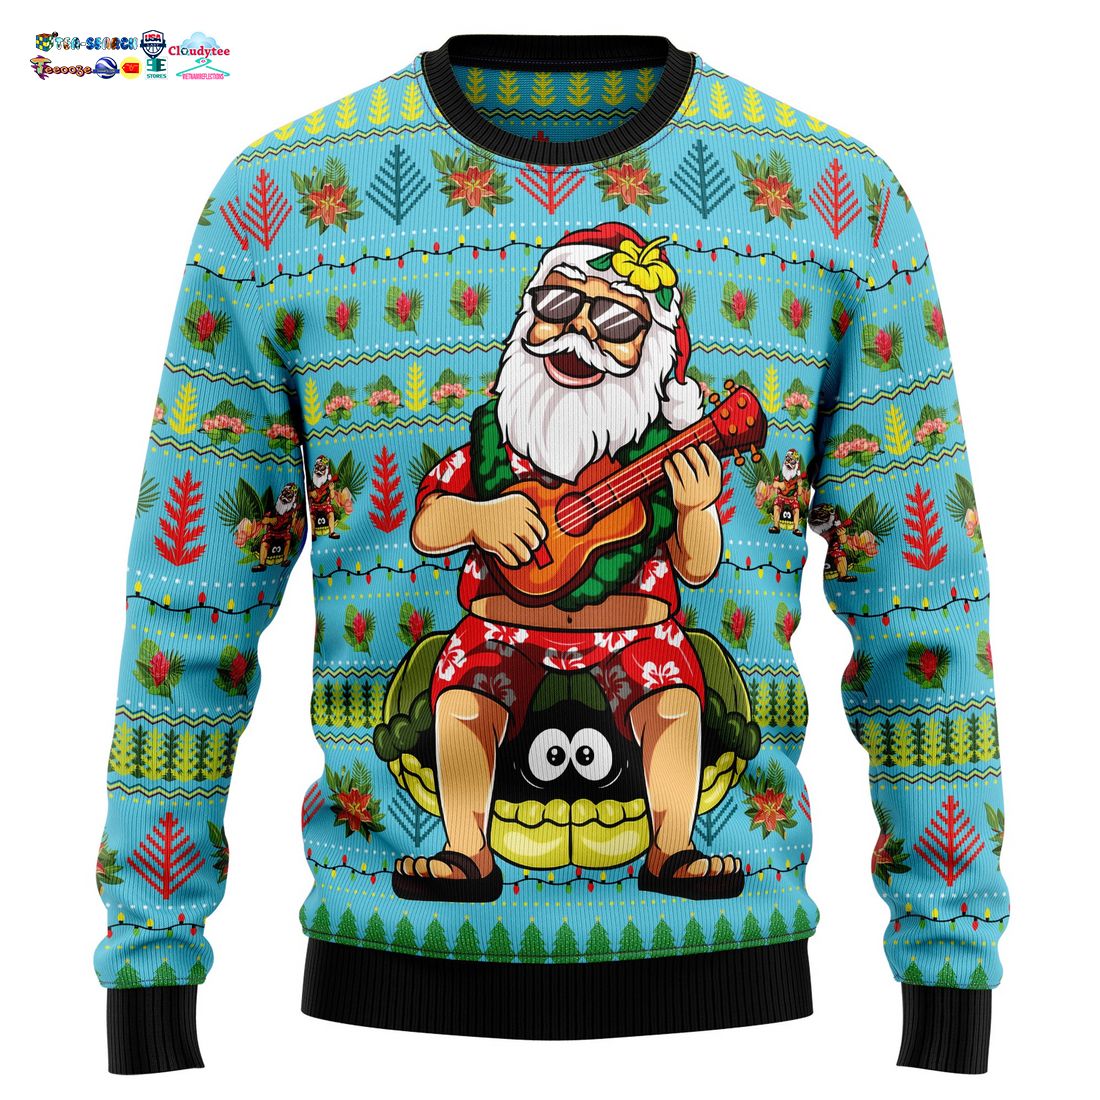 Hawaiian Christmas Santa Claus Ugly Christmas Sweater - Cool look bro